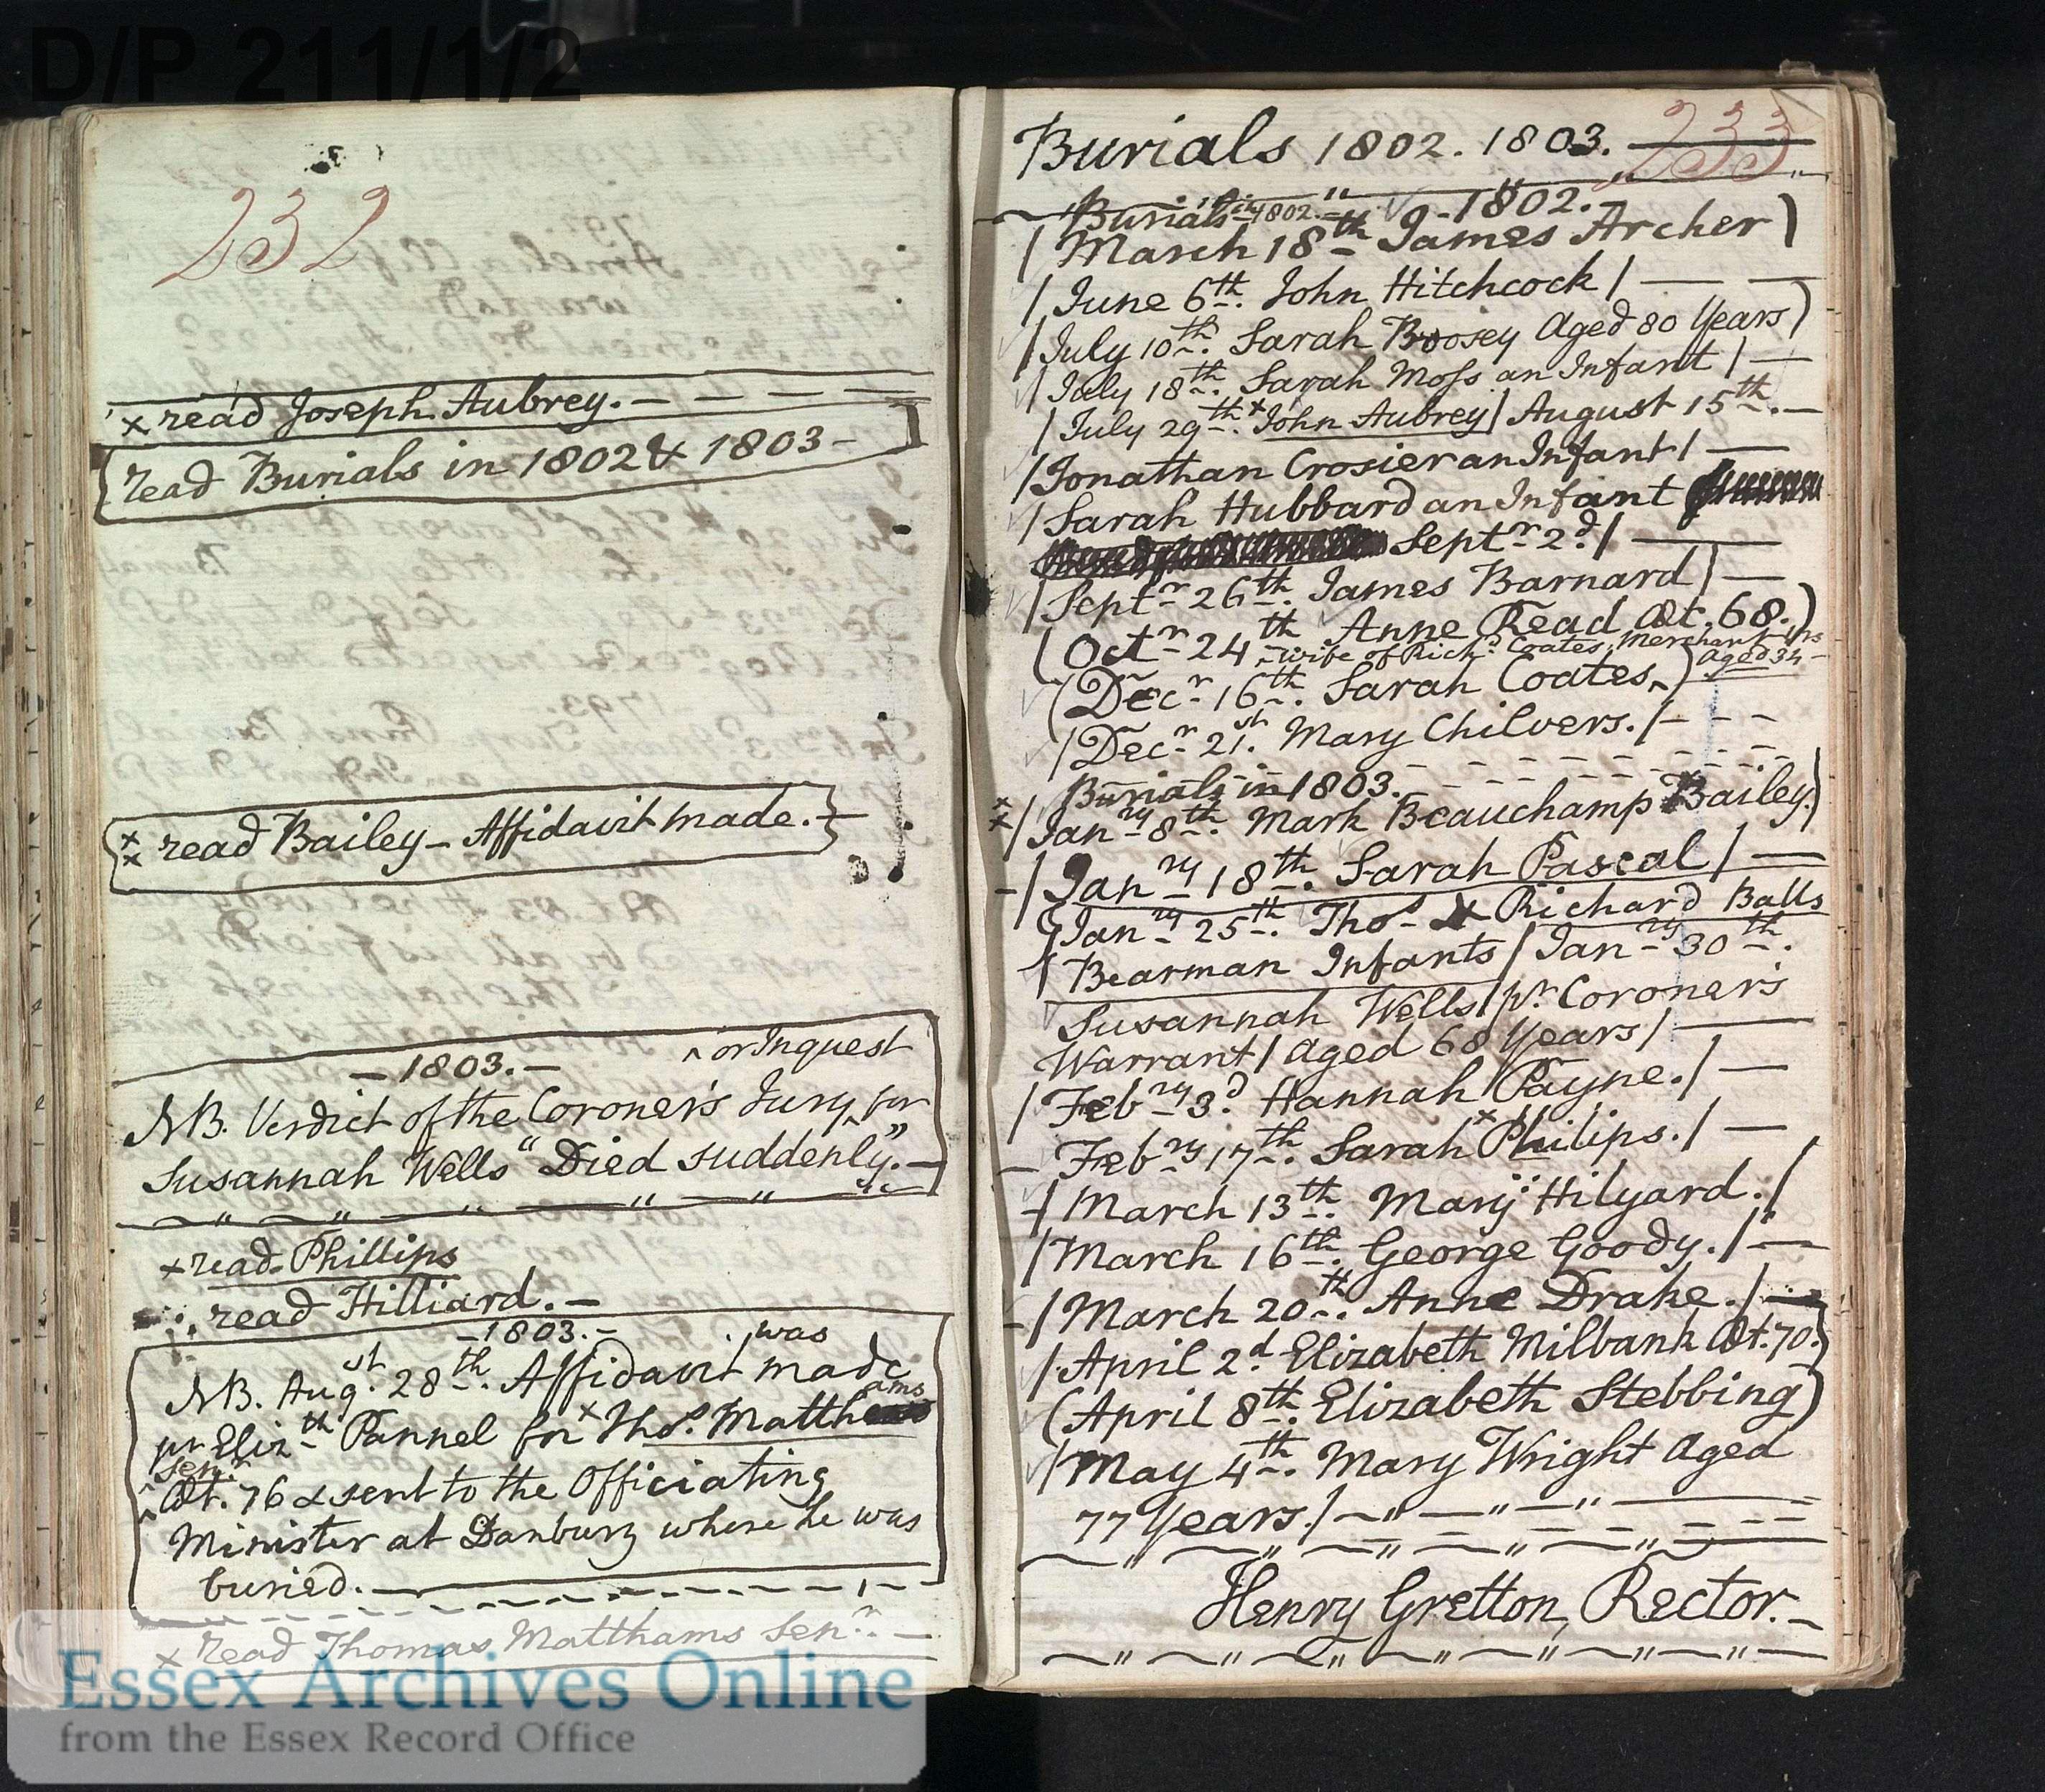 January 25th 1803 burial, Thomas and Richard Balls Bearman infants